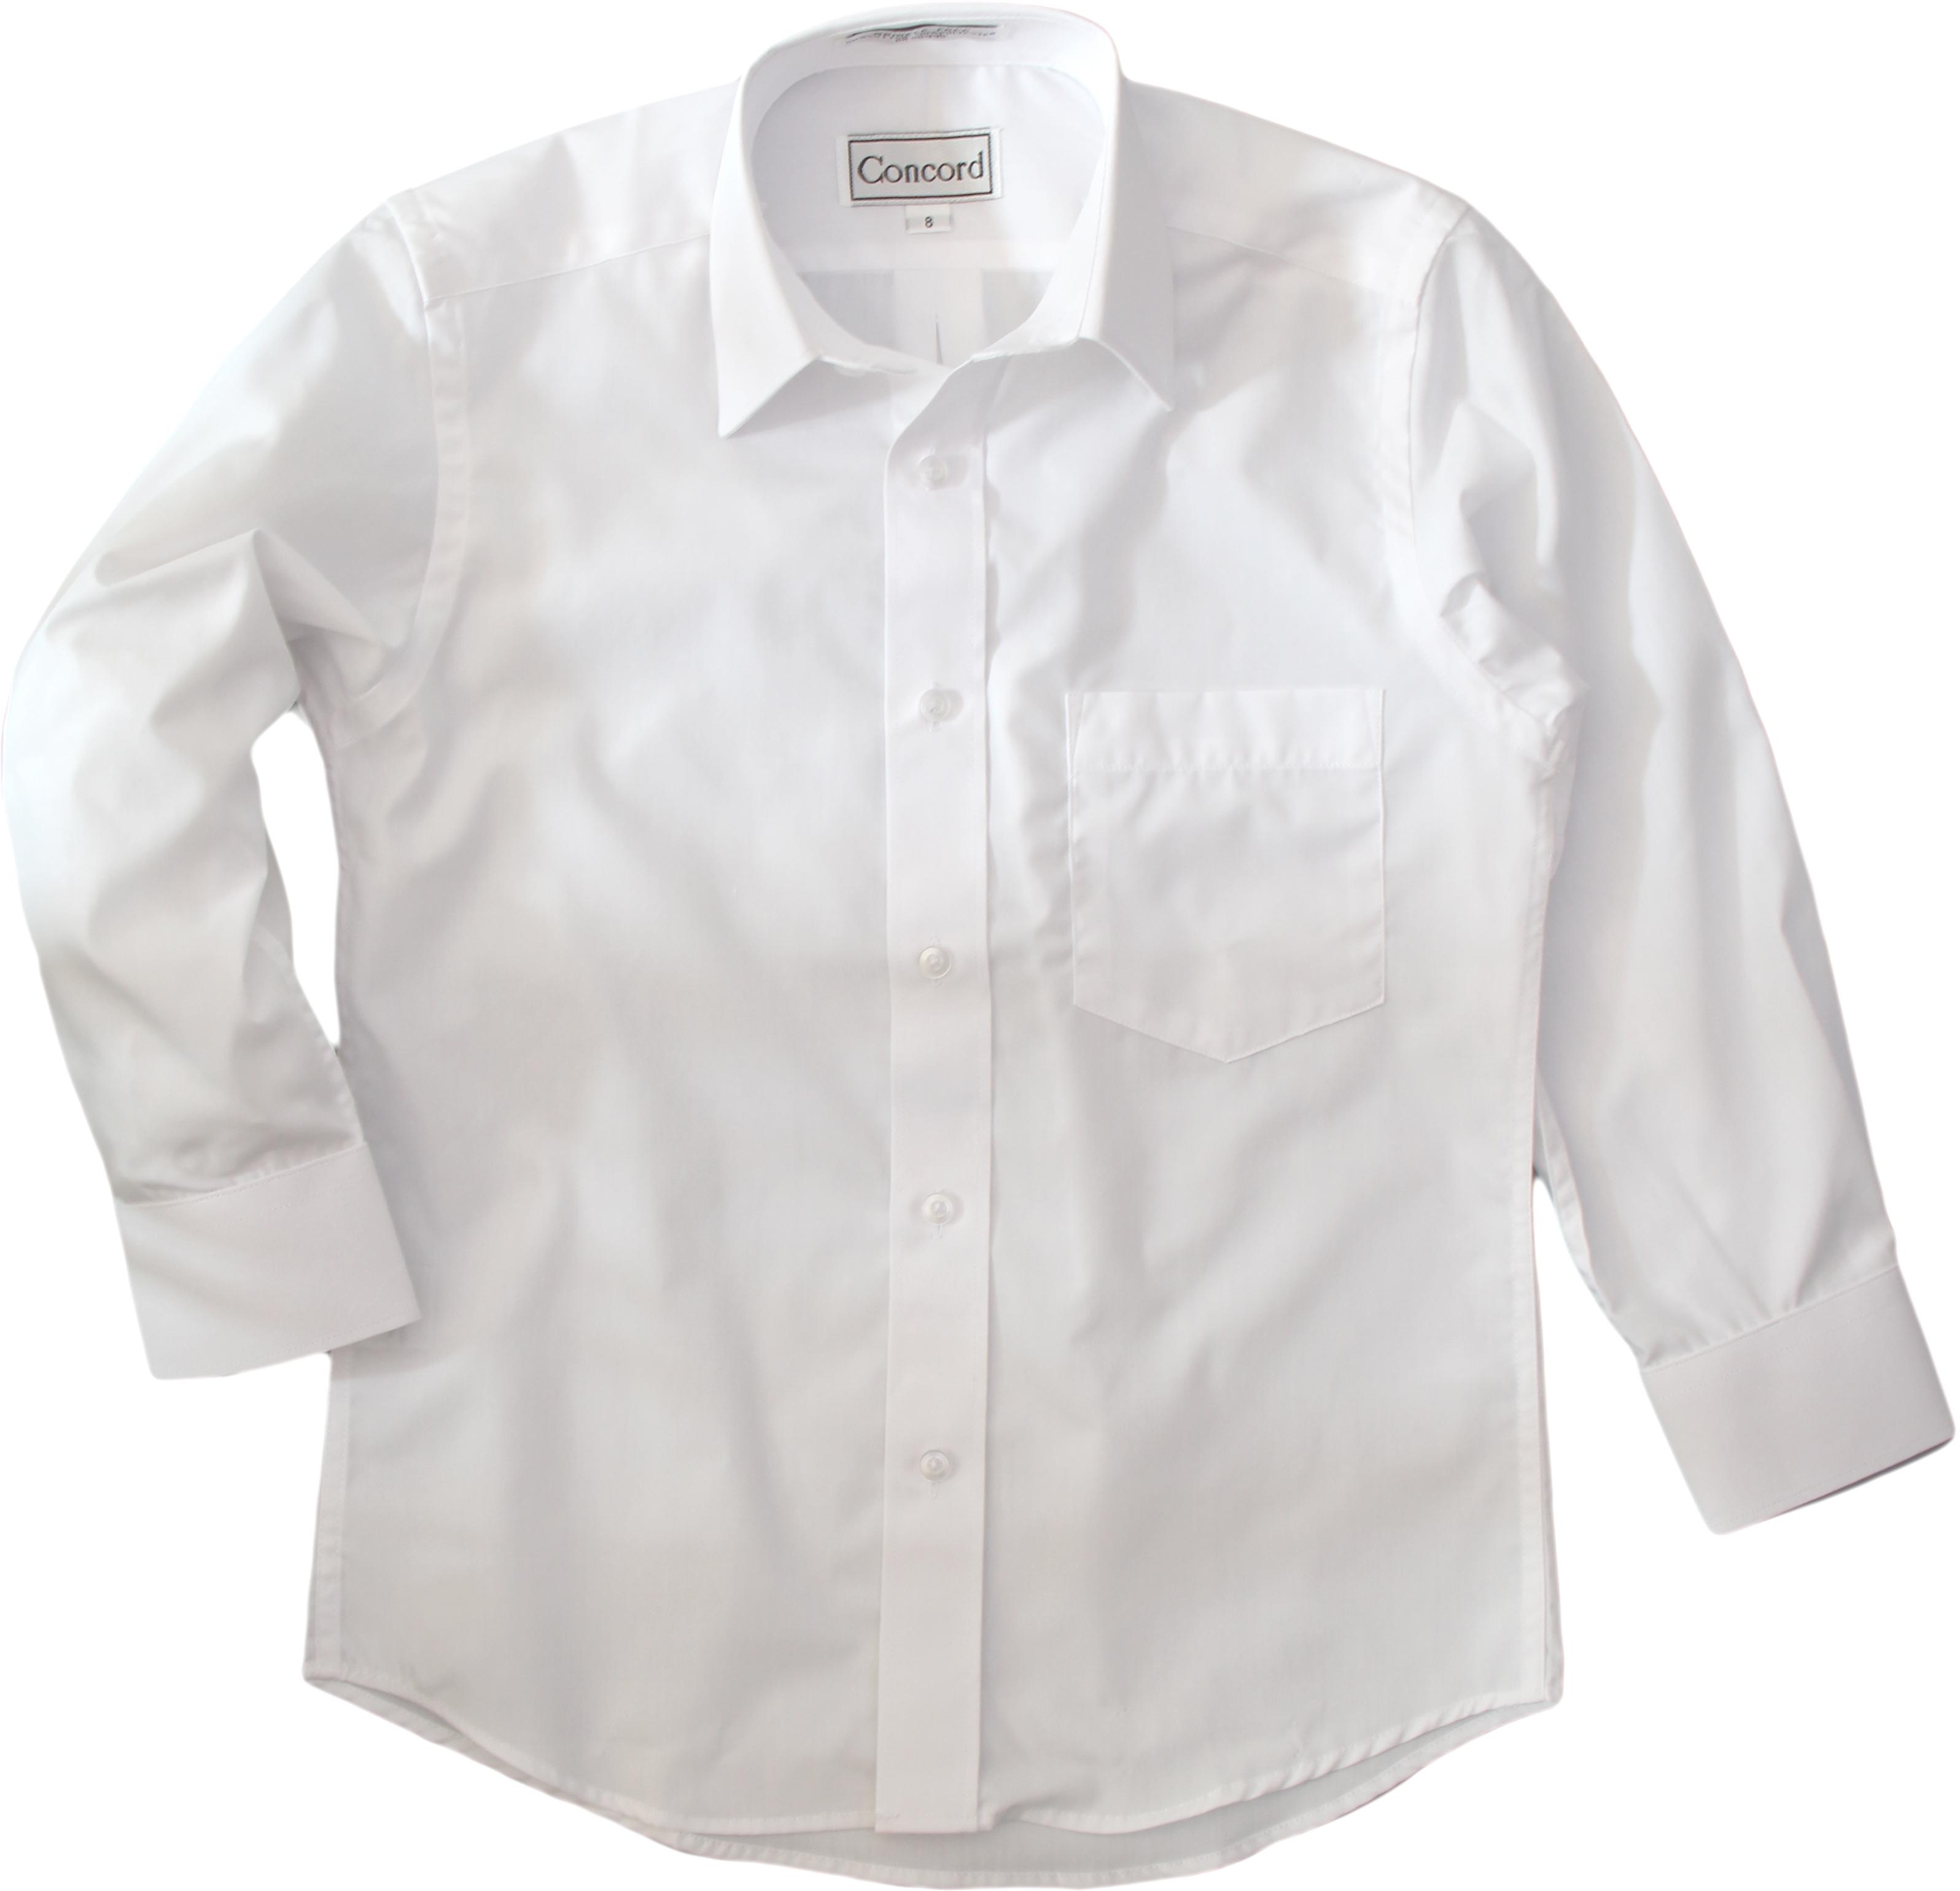 CONCORD Boys White Dress Shirt - Long Sleeves | eBay